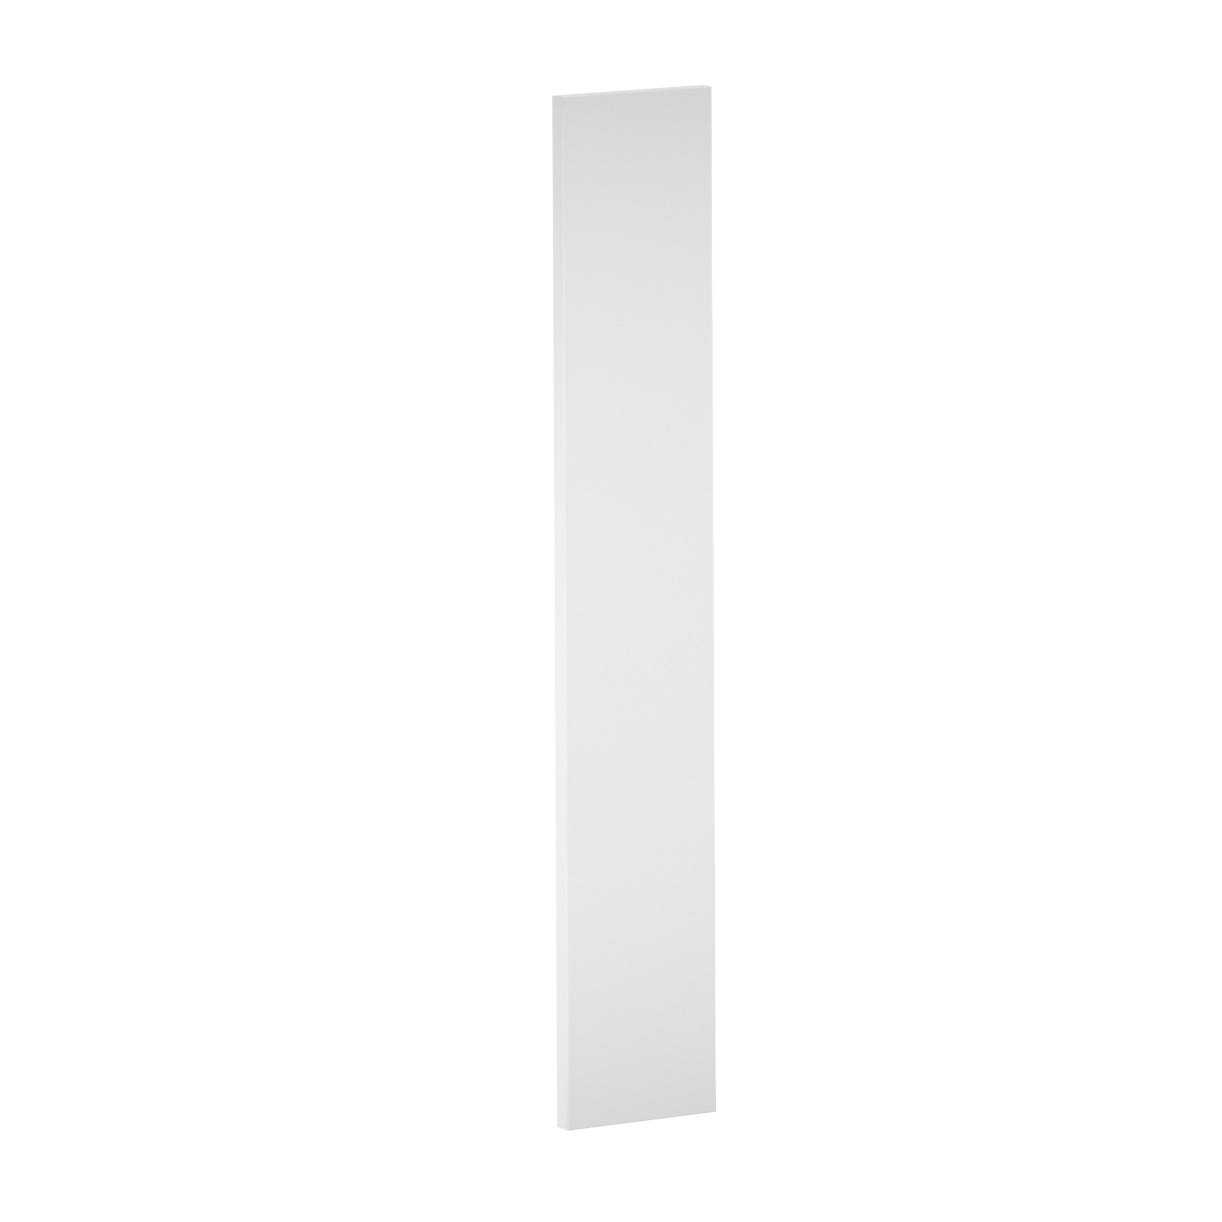 Puerta para mueble de cocina Toscane blanco mate H 64 x L 45 cm